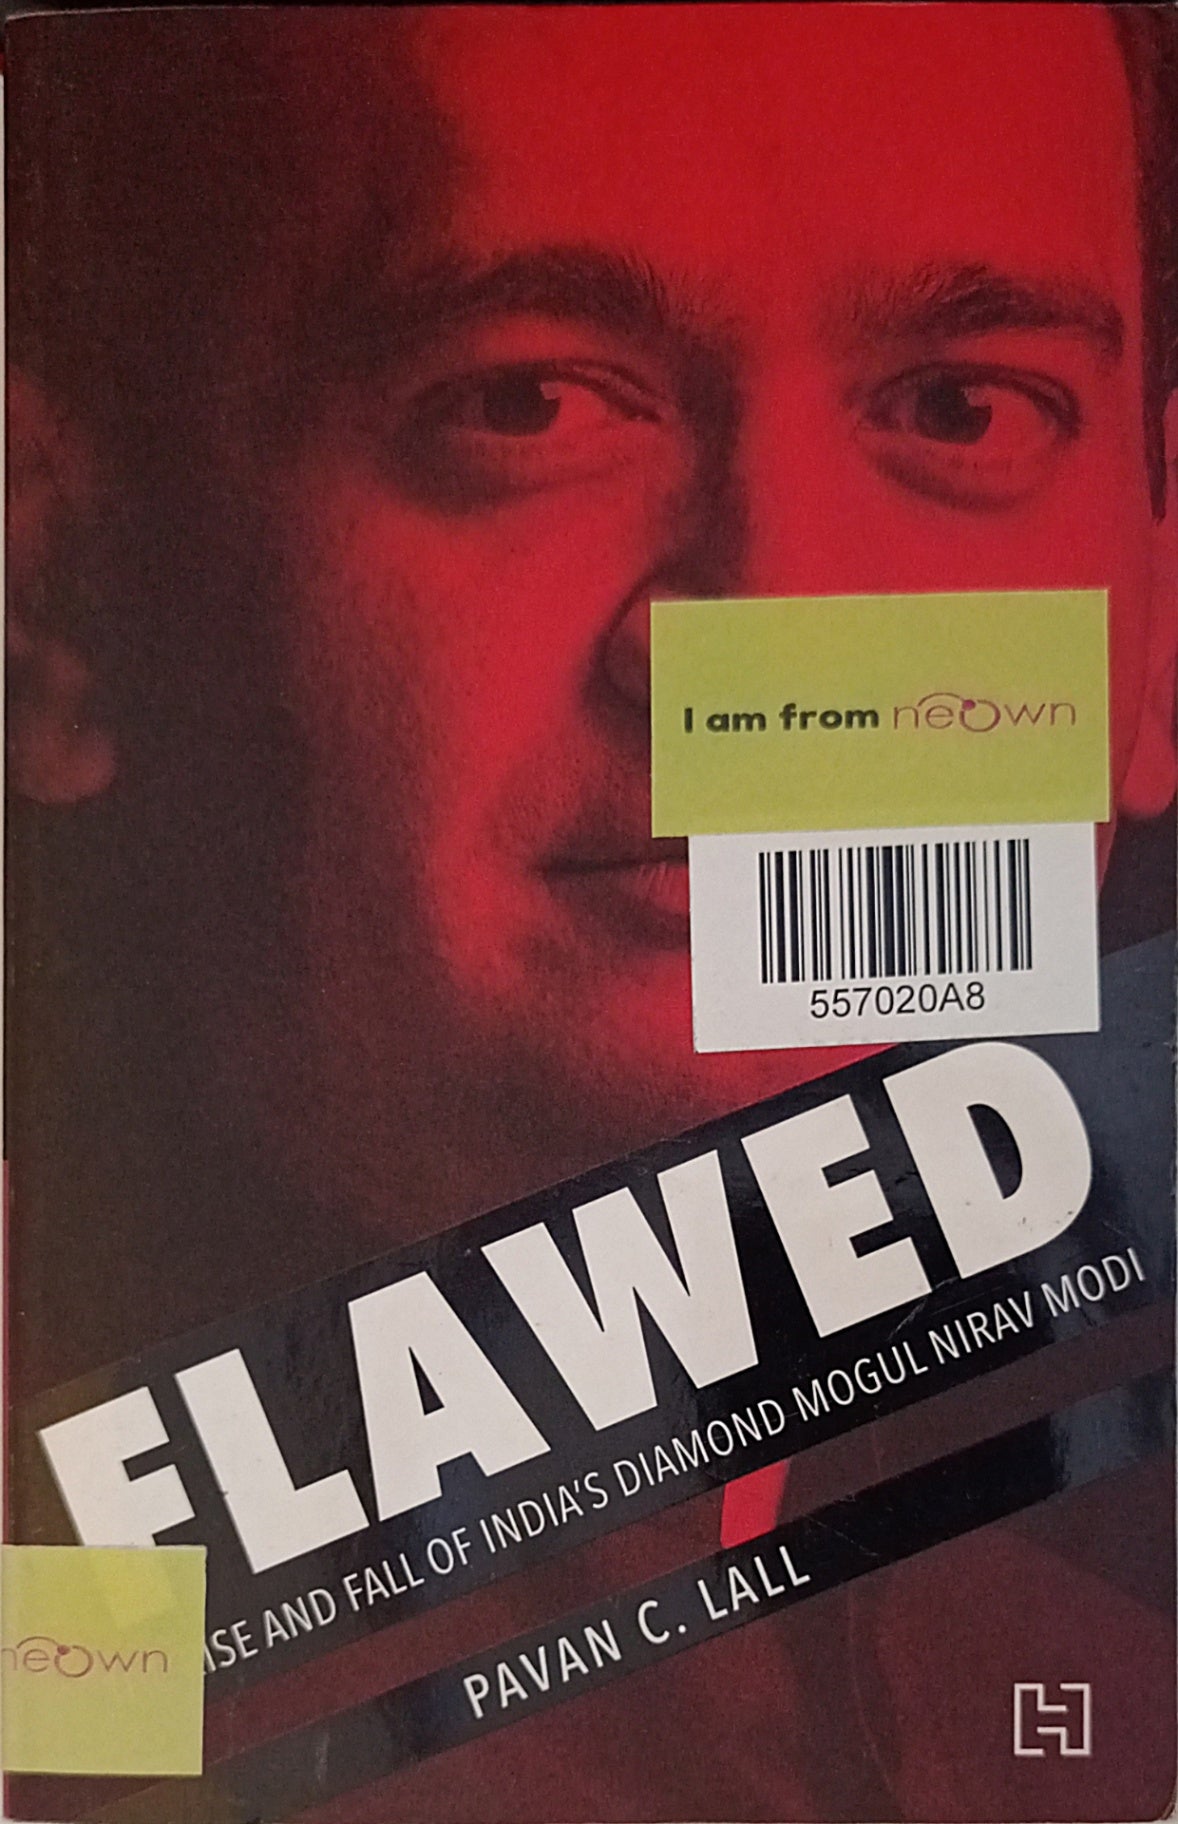 Flawed